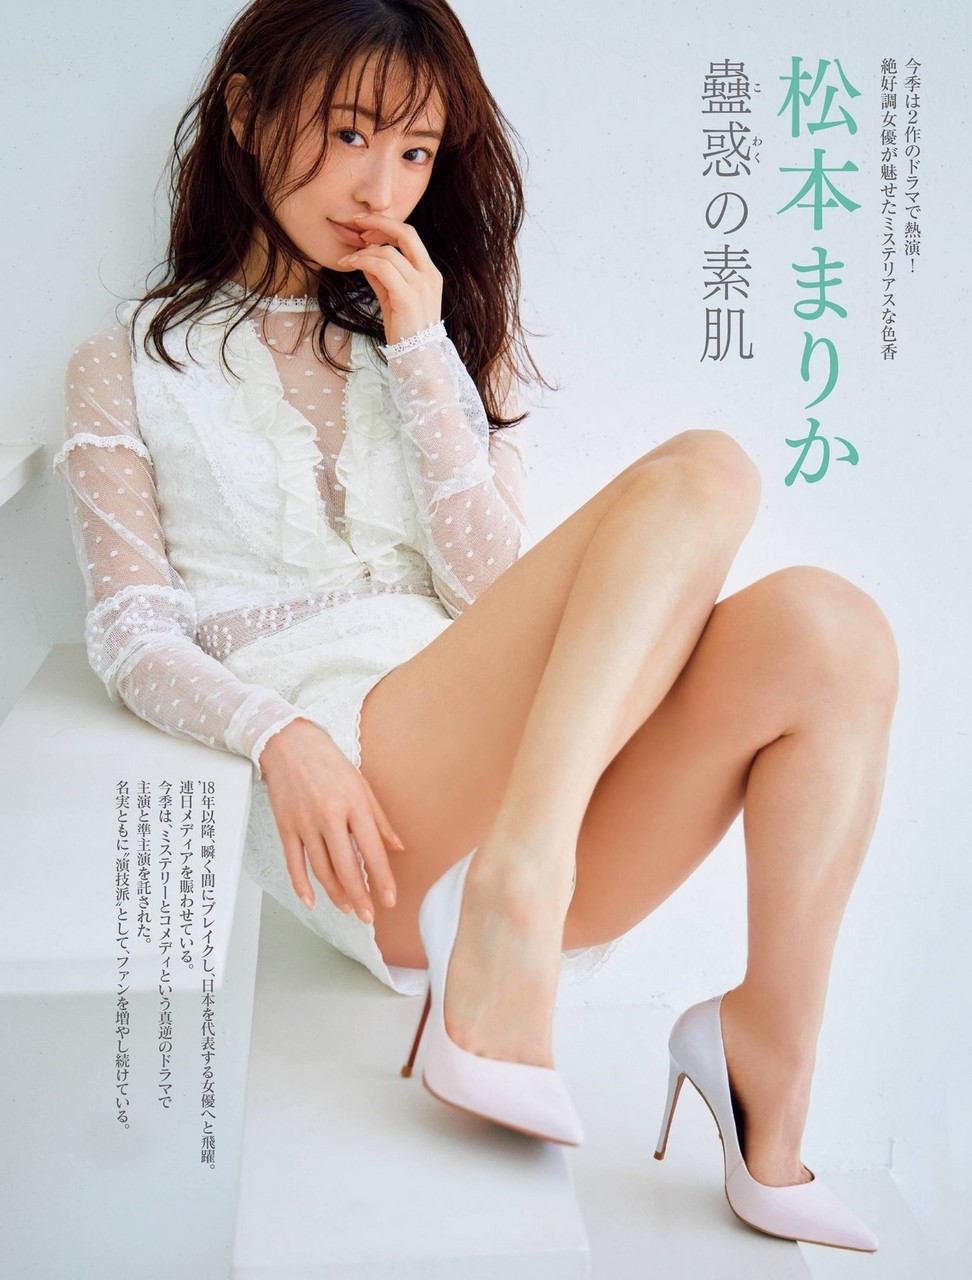 Marika Matsumoto Feet